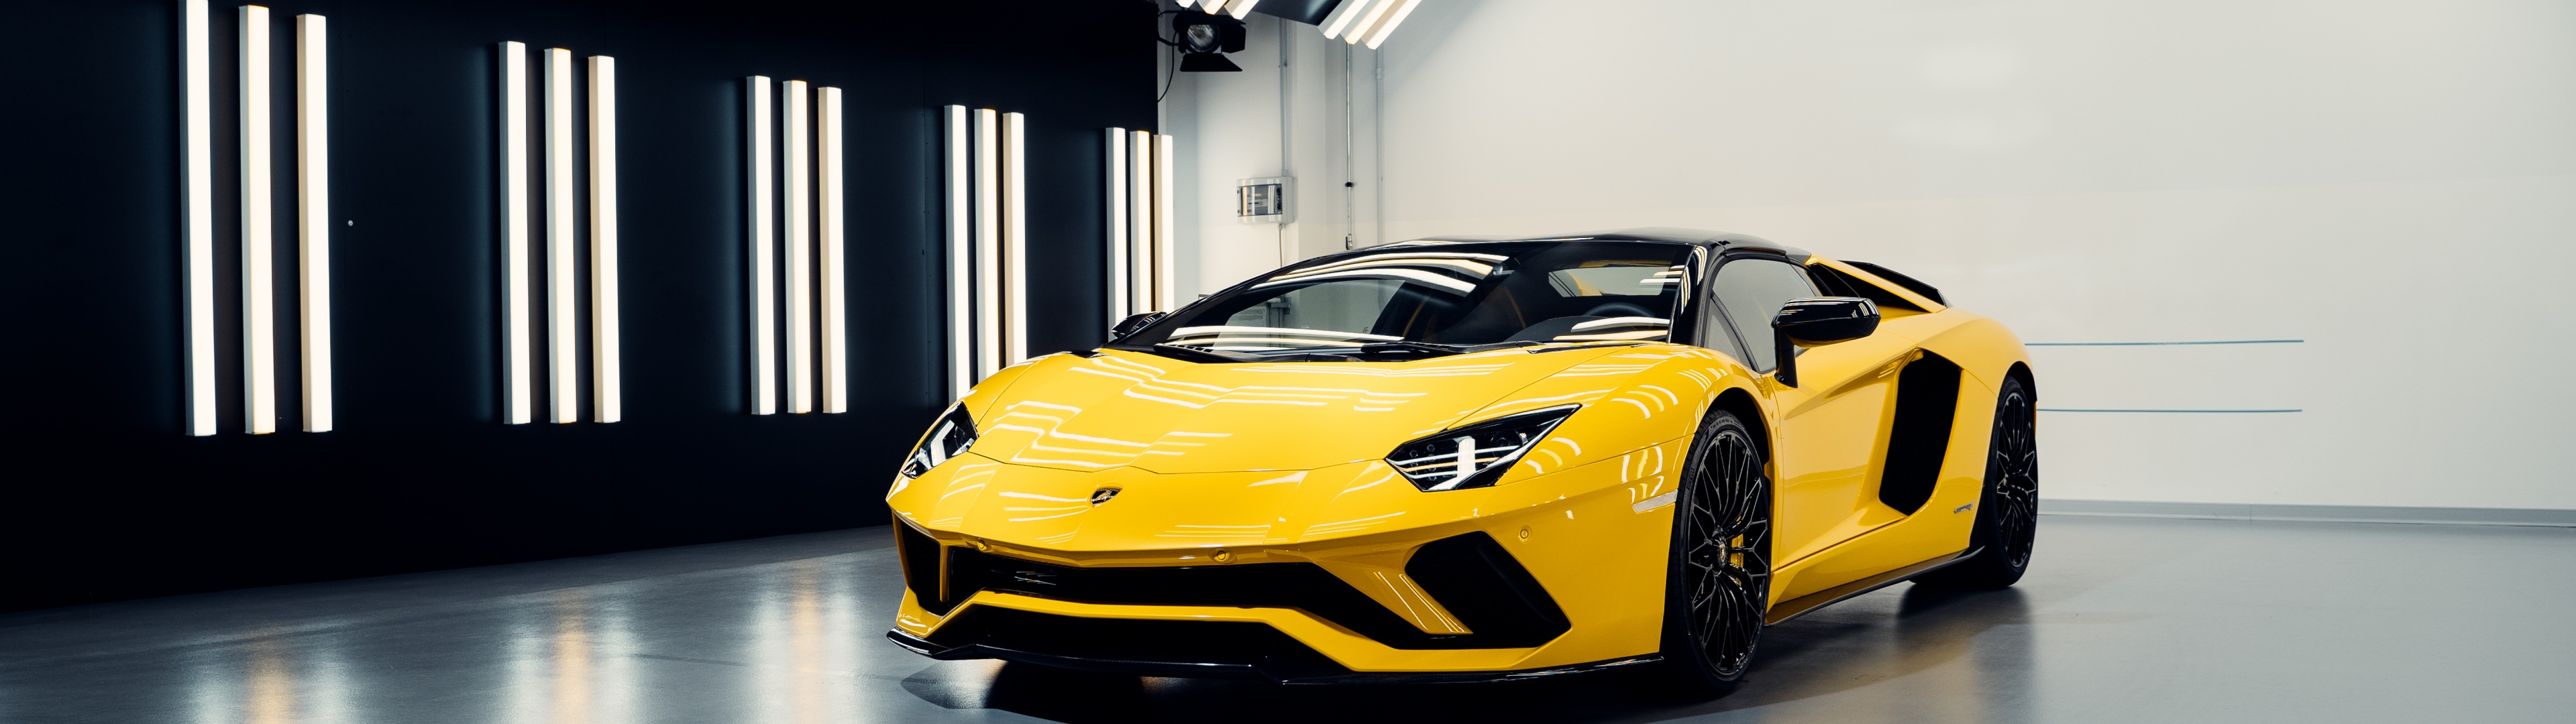 Lamborghini Aventador Wallpaper 4K, Supercars, 5K, Cars, #7865